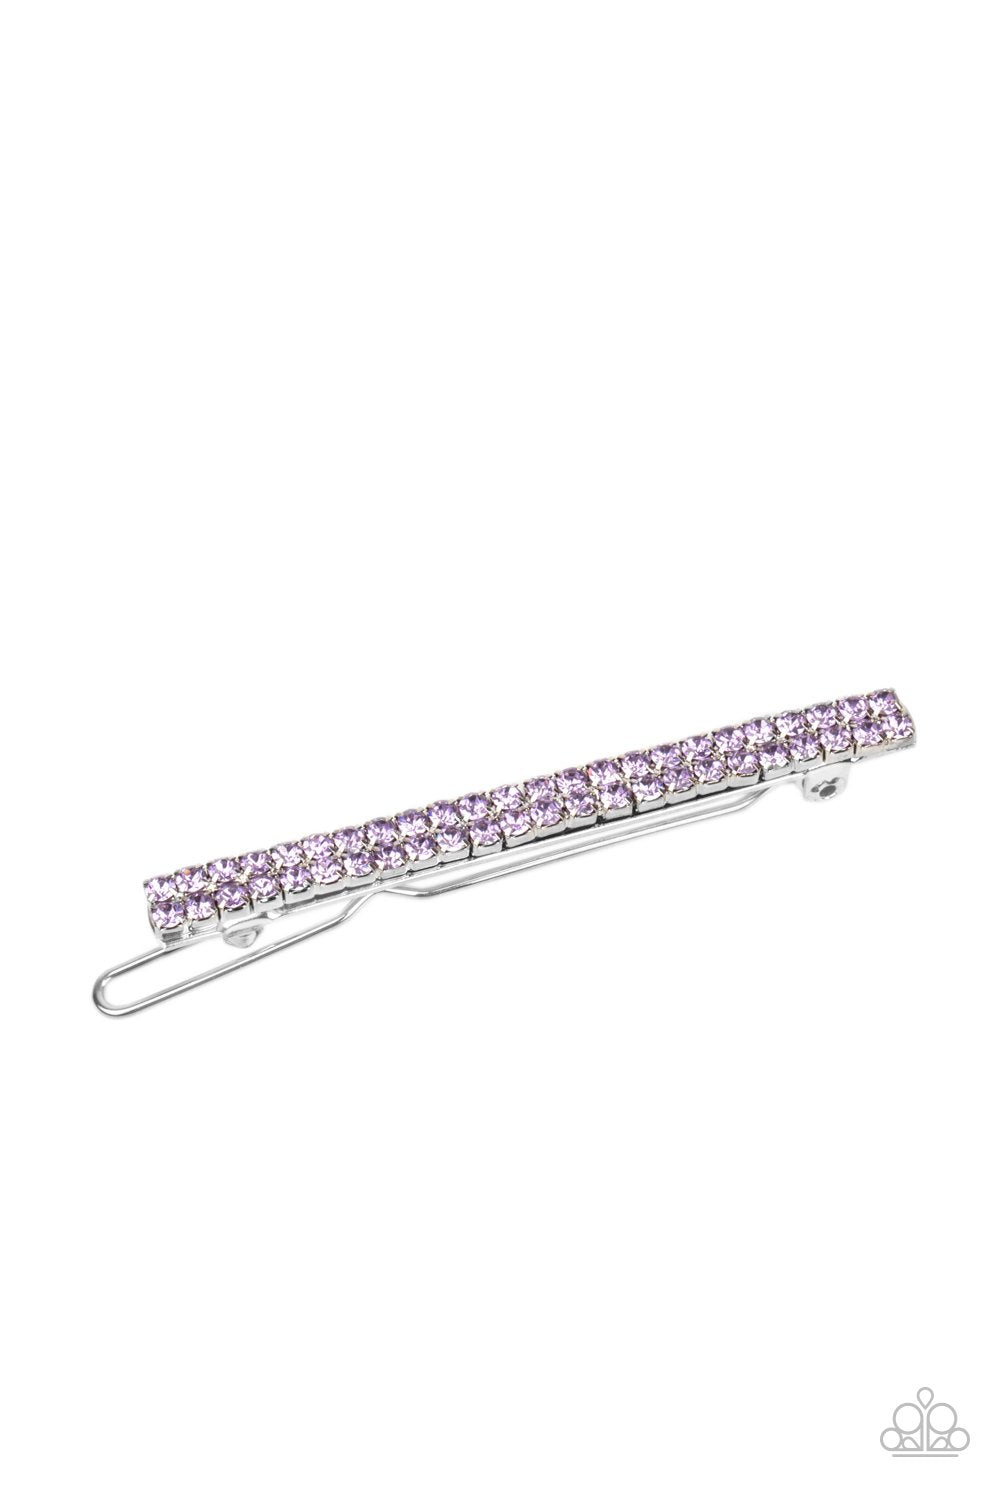 Thats GLOW-biz Purple Rhinestone Hair Clip - Paparazzi Accessories- lightbox - CarasShop.com - $5 Jewelry by Cara Jewels